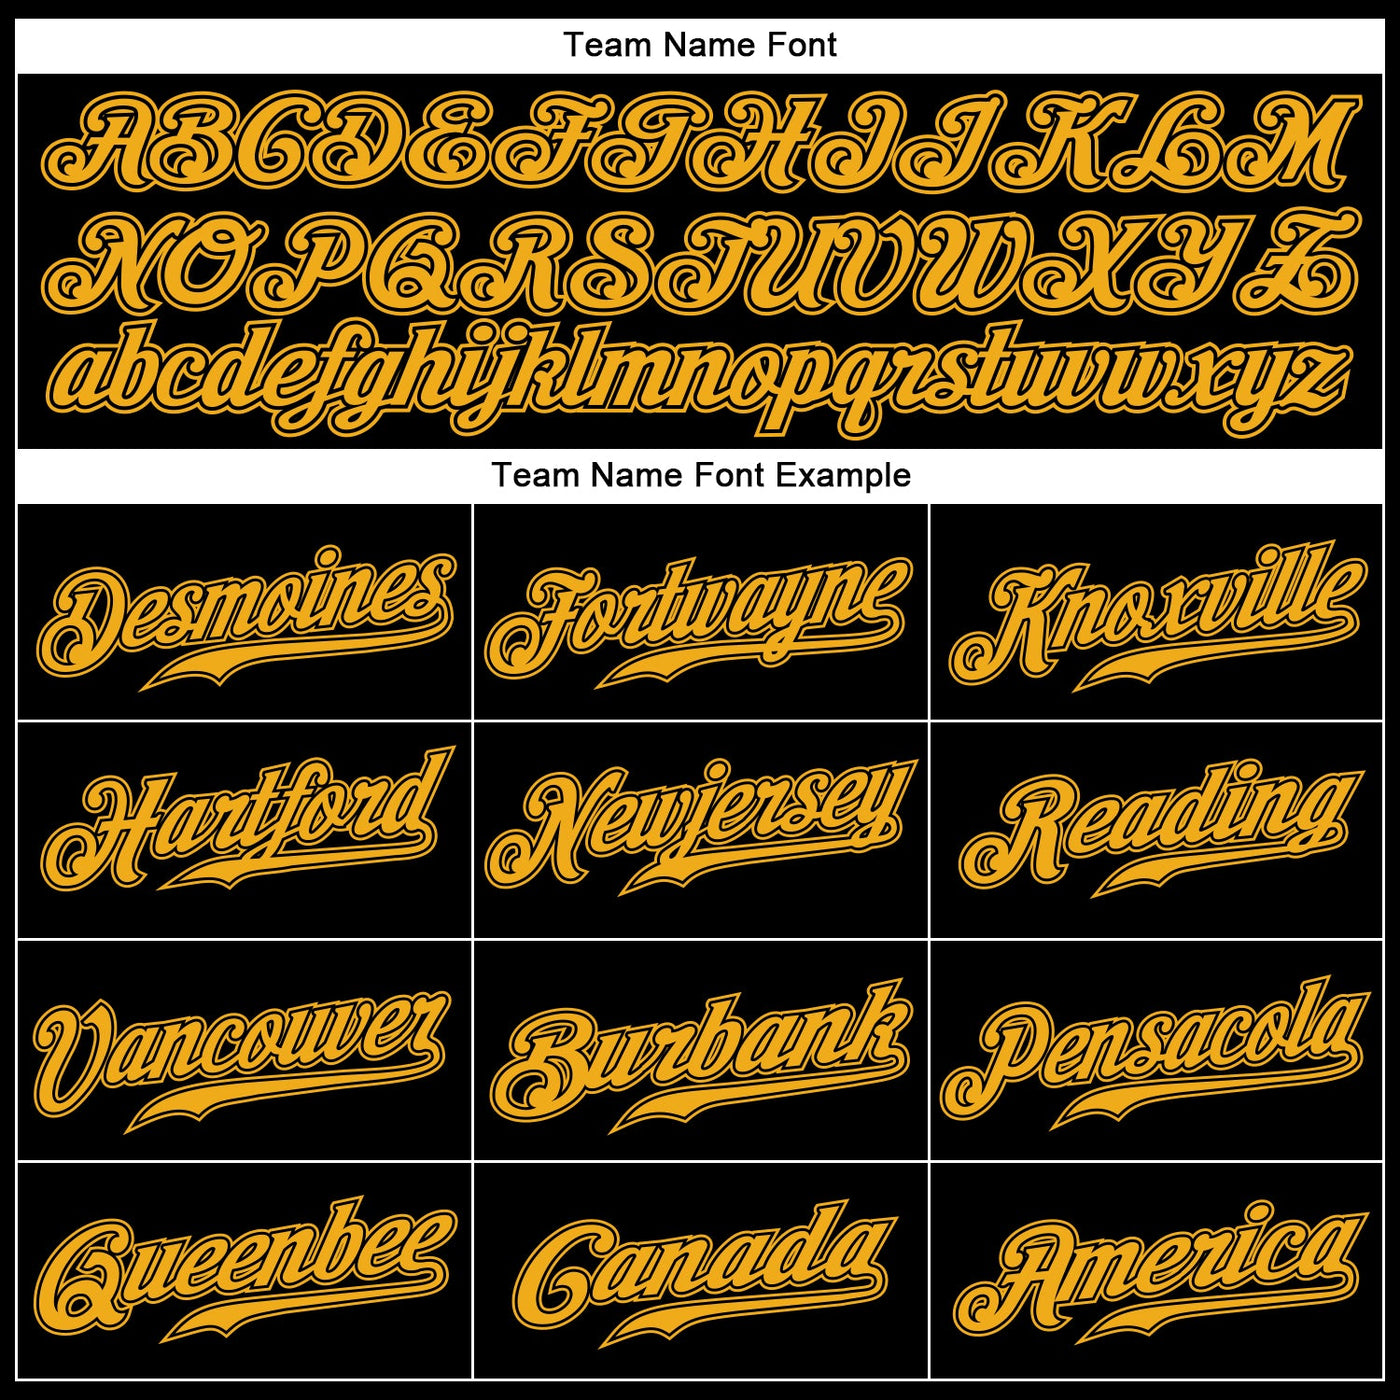 Custom Black Gold Authentic Baseball Jersey - Owls Matrix LTD